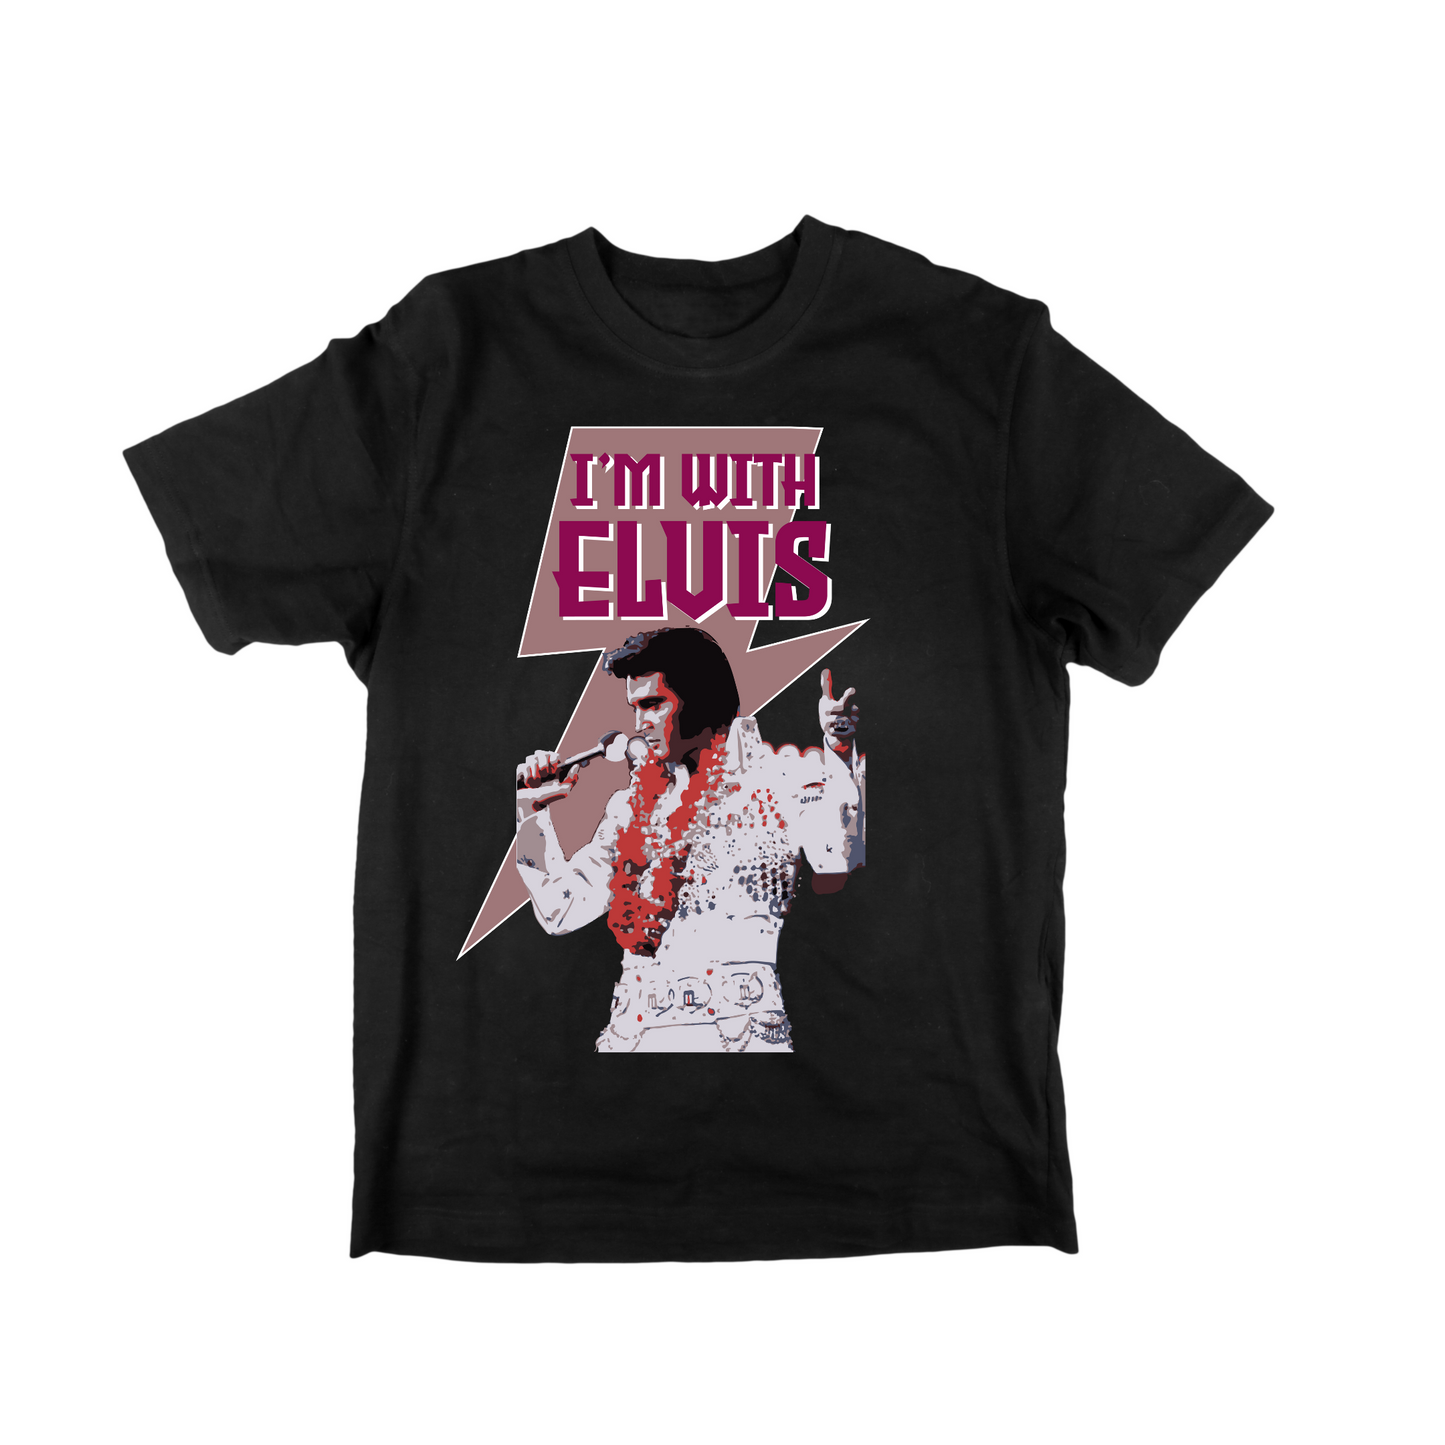 Elvis Presley Shirt, I'm With Elvis Shirt, Elvis Presley Tee, Mom Shirt, Elvis Presley Graphic Tee, T-Shirt for Women and Women, Gift For Mom